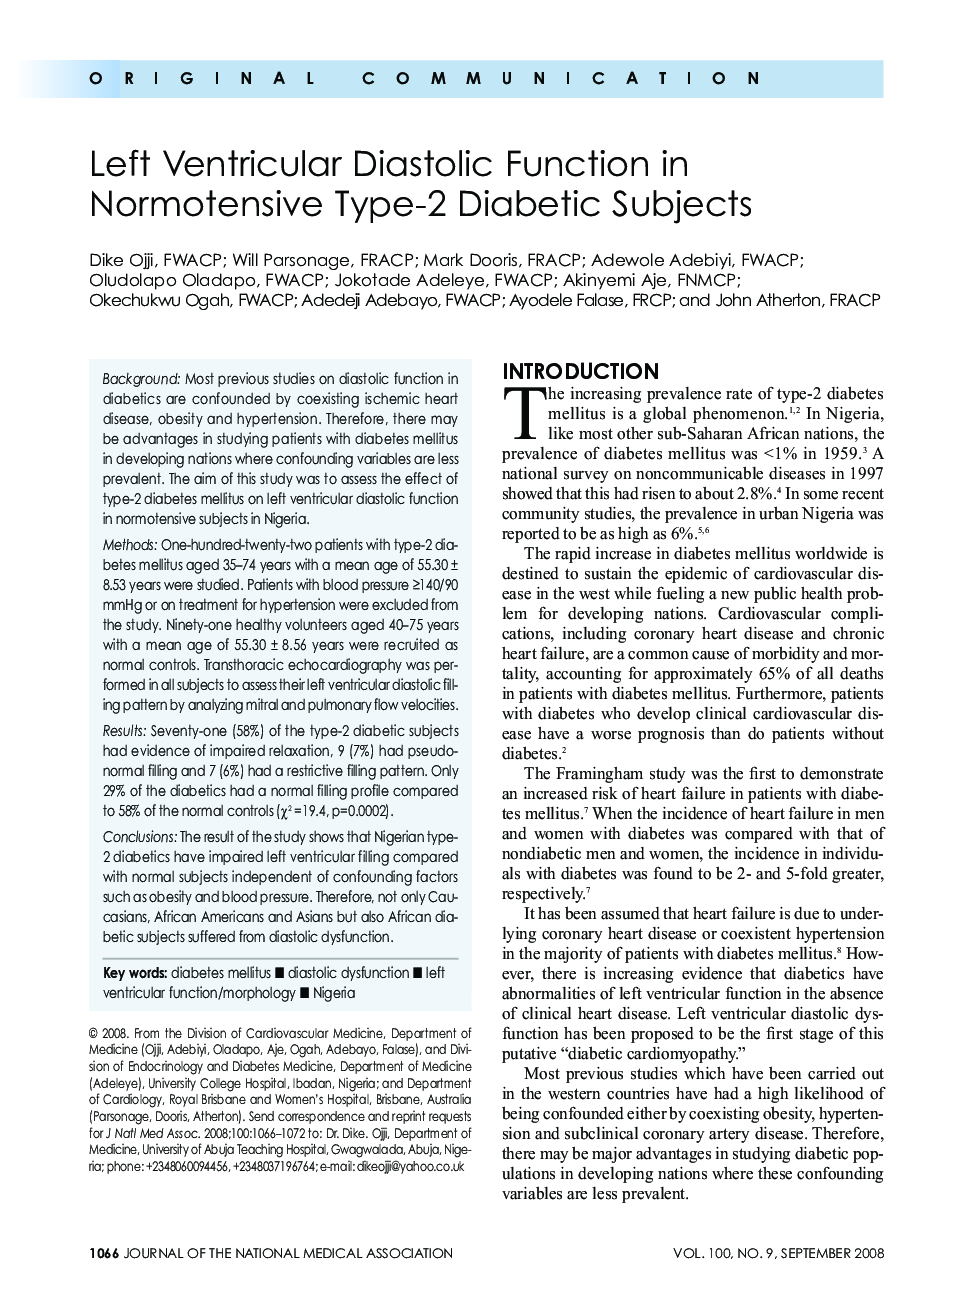 Left Ventricular Diastolic Function in Normotensive Type-2 Diabetic Subjects